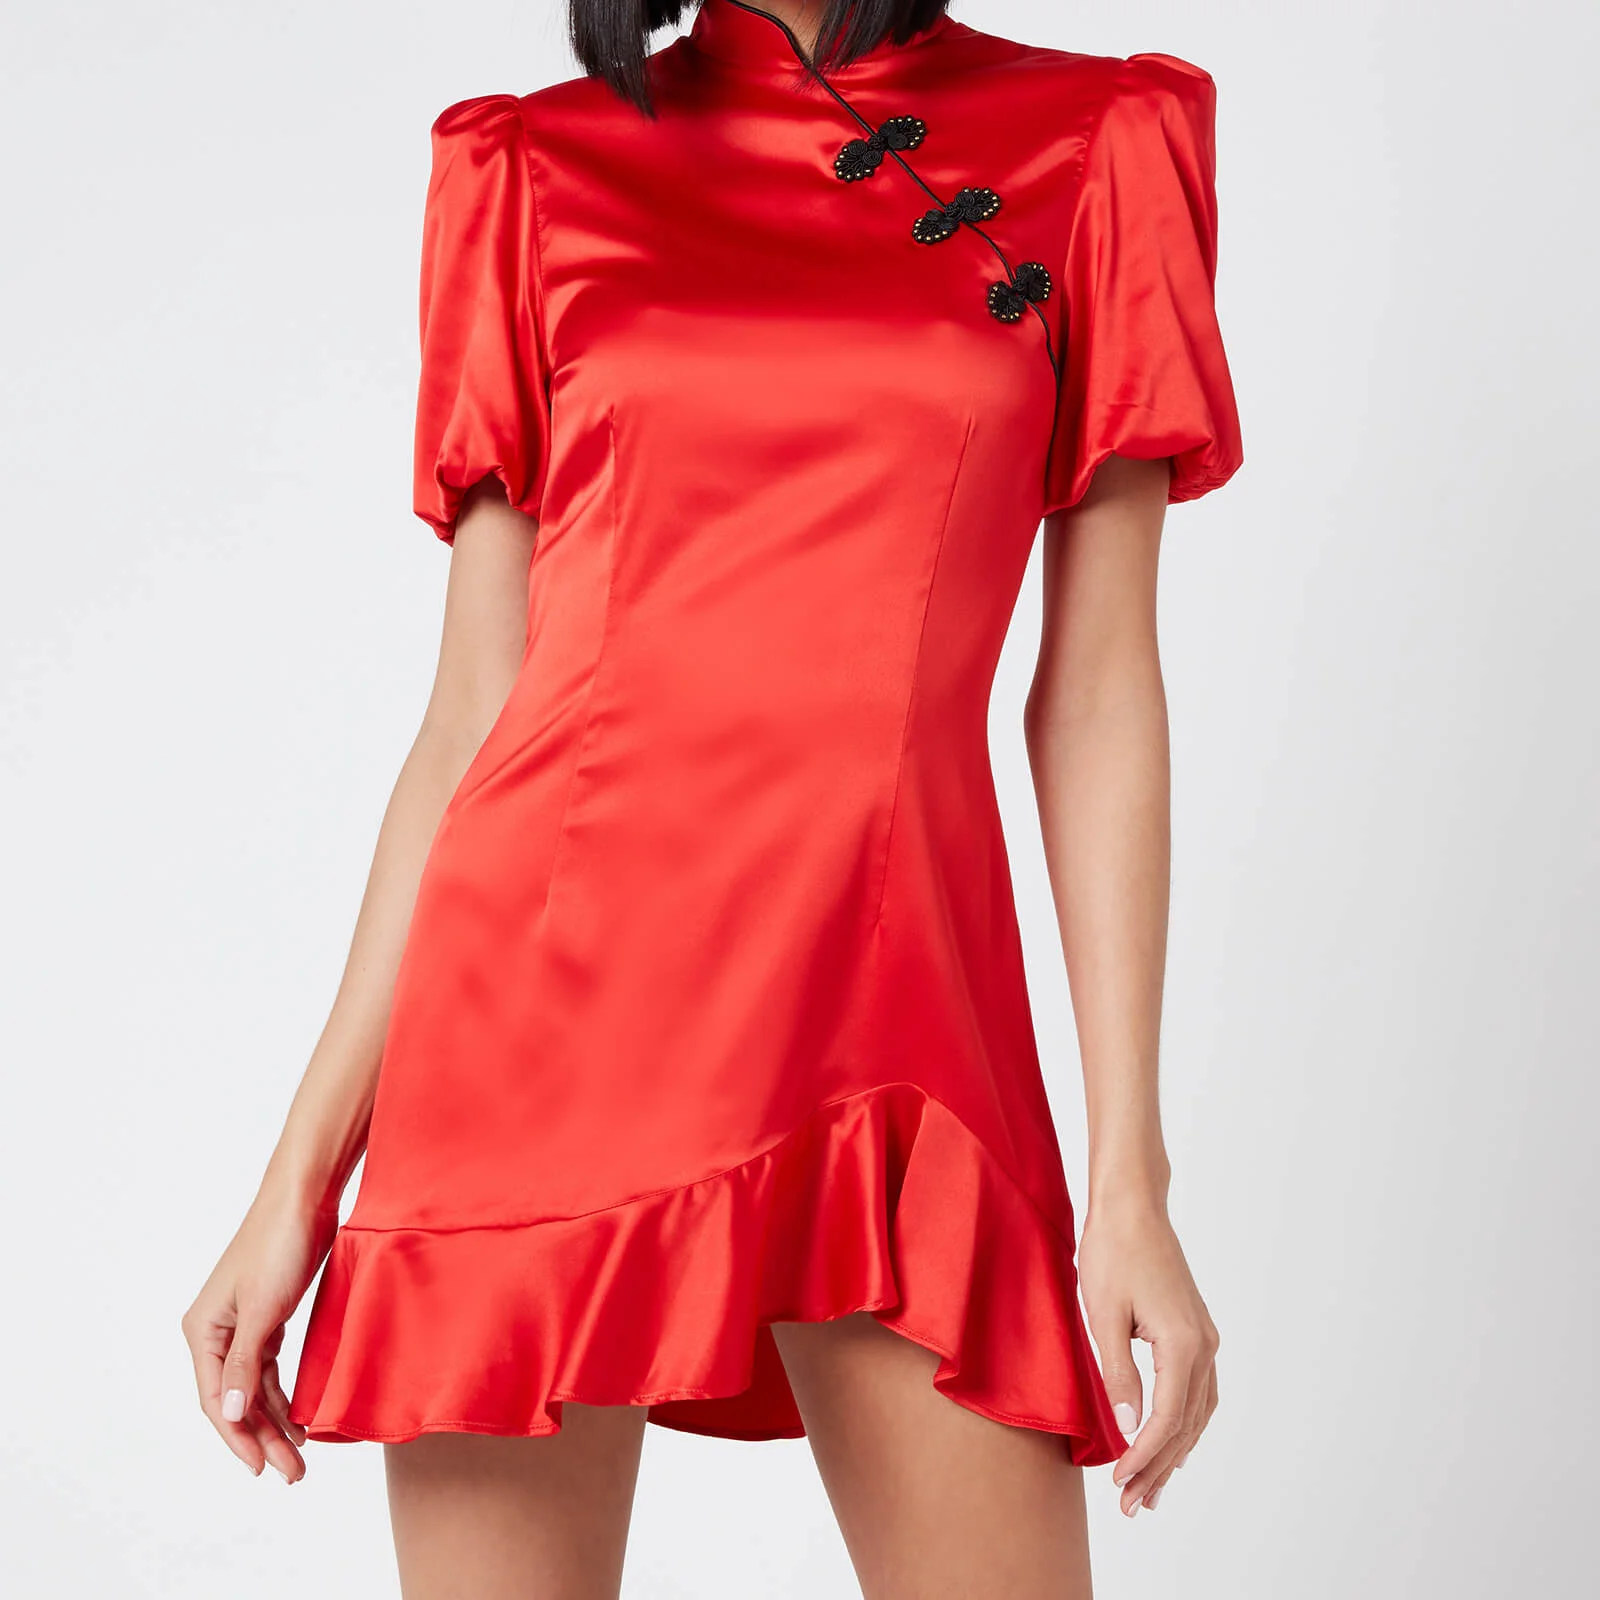 De La Vali Women's Bluebell Dress - Solid Red/Black Frogs Image 1